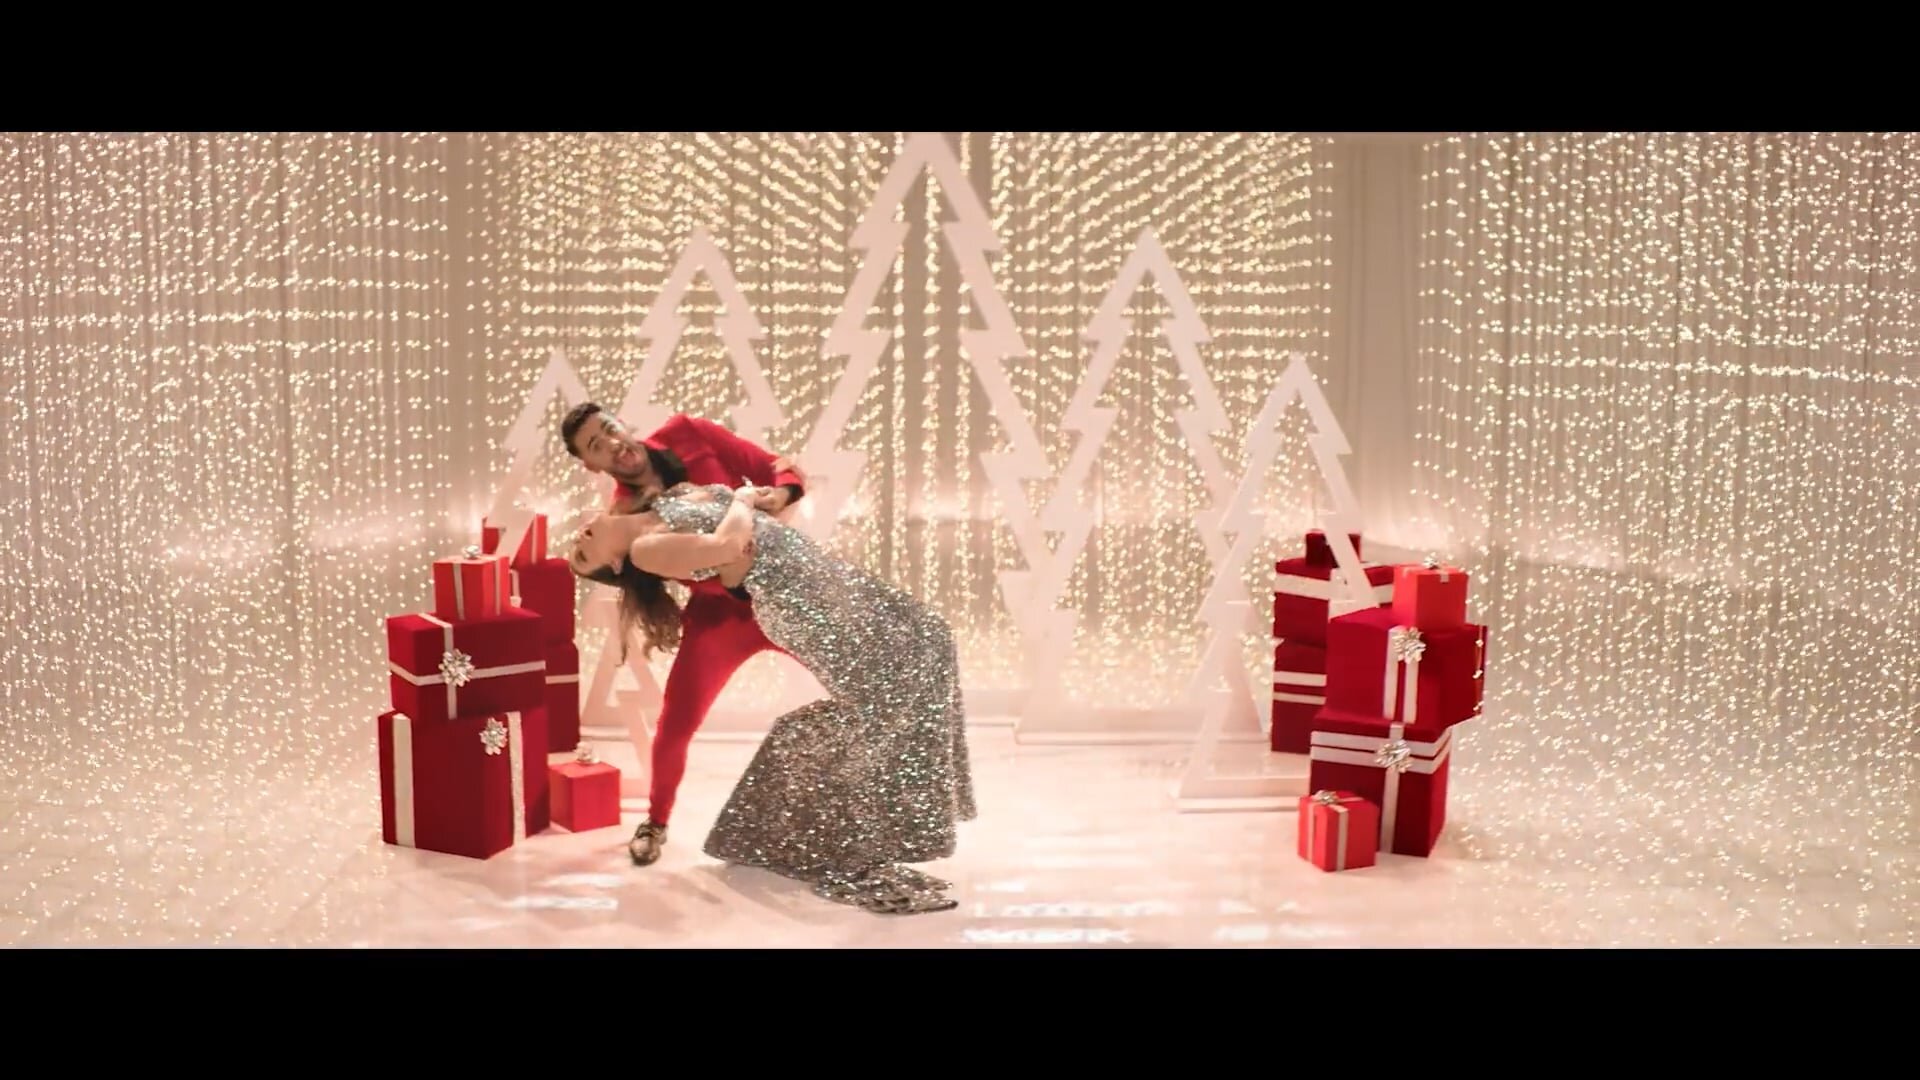 Couple dancing. Telemundo - Holidays campaign